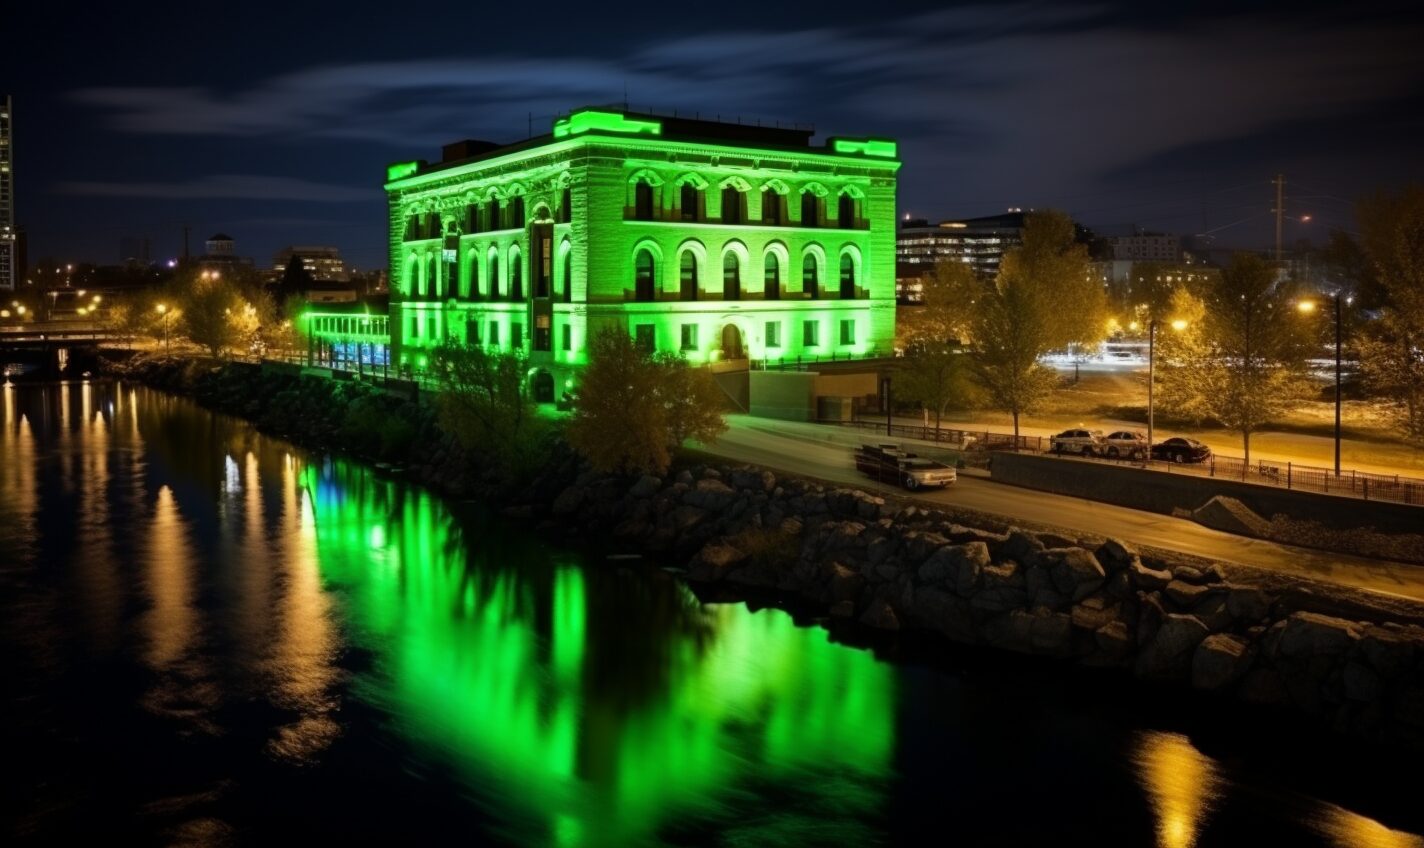 spokane, washington in a black and neon green glow